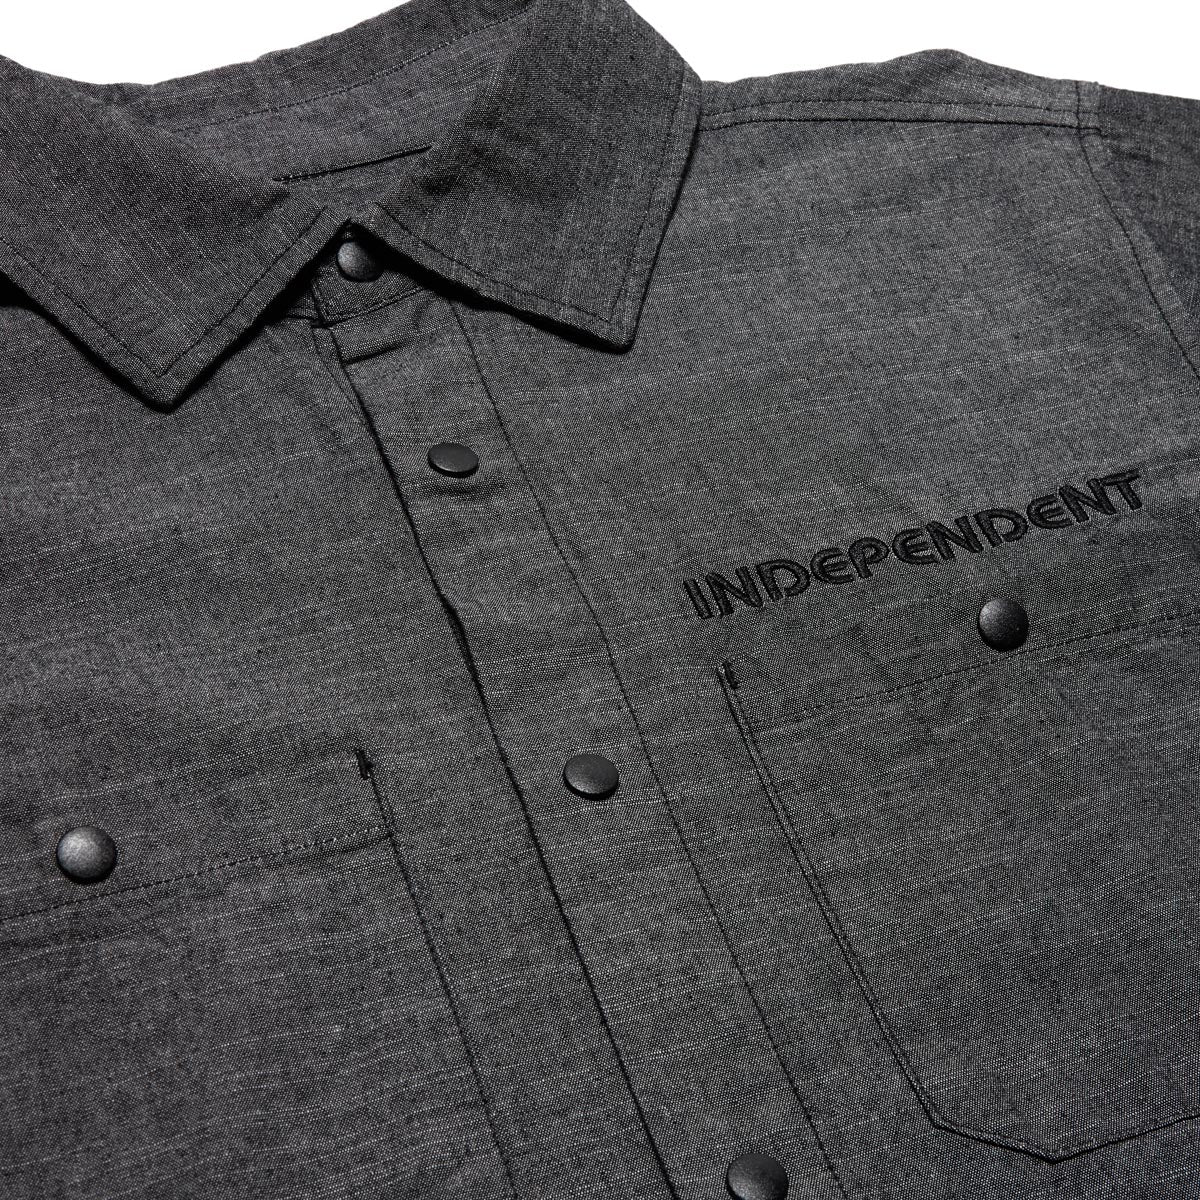 Independent Groundwork Work Shirt - Black Chambray image 3